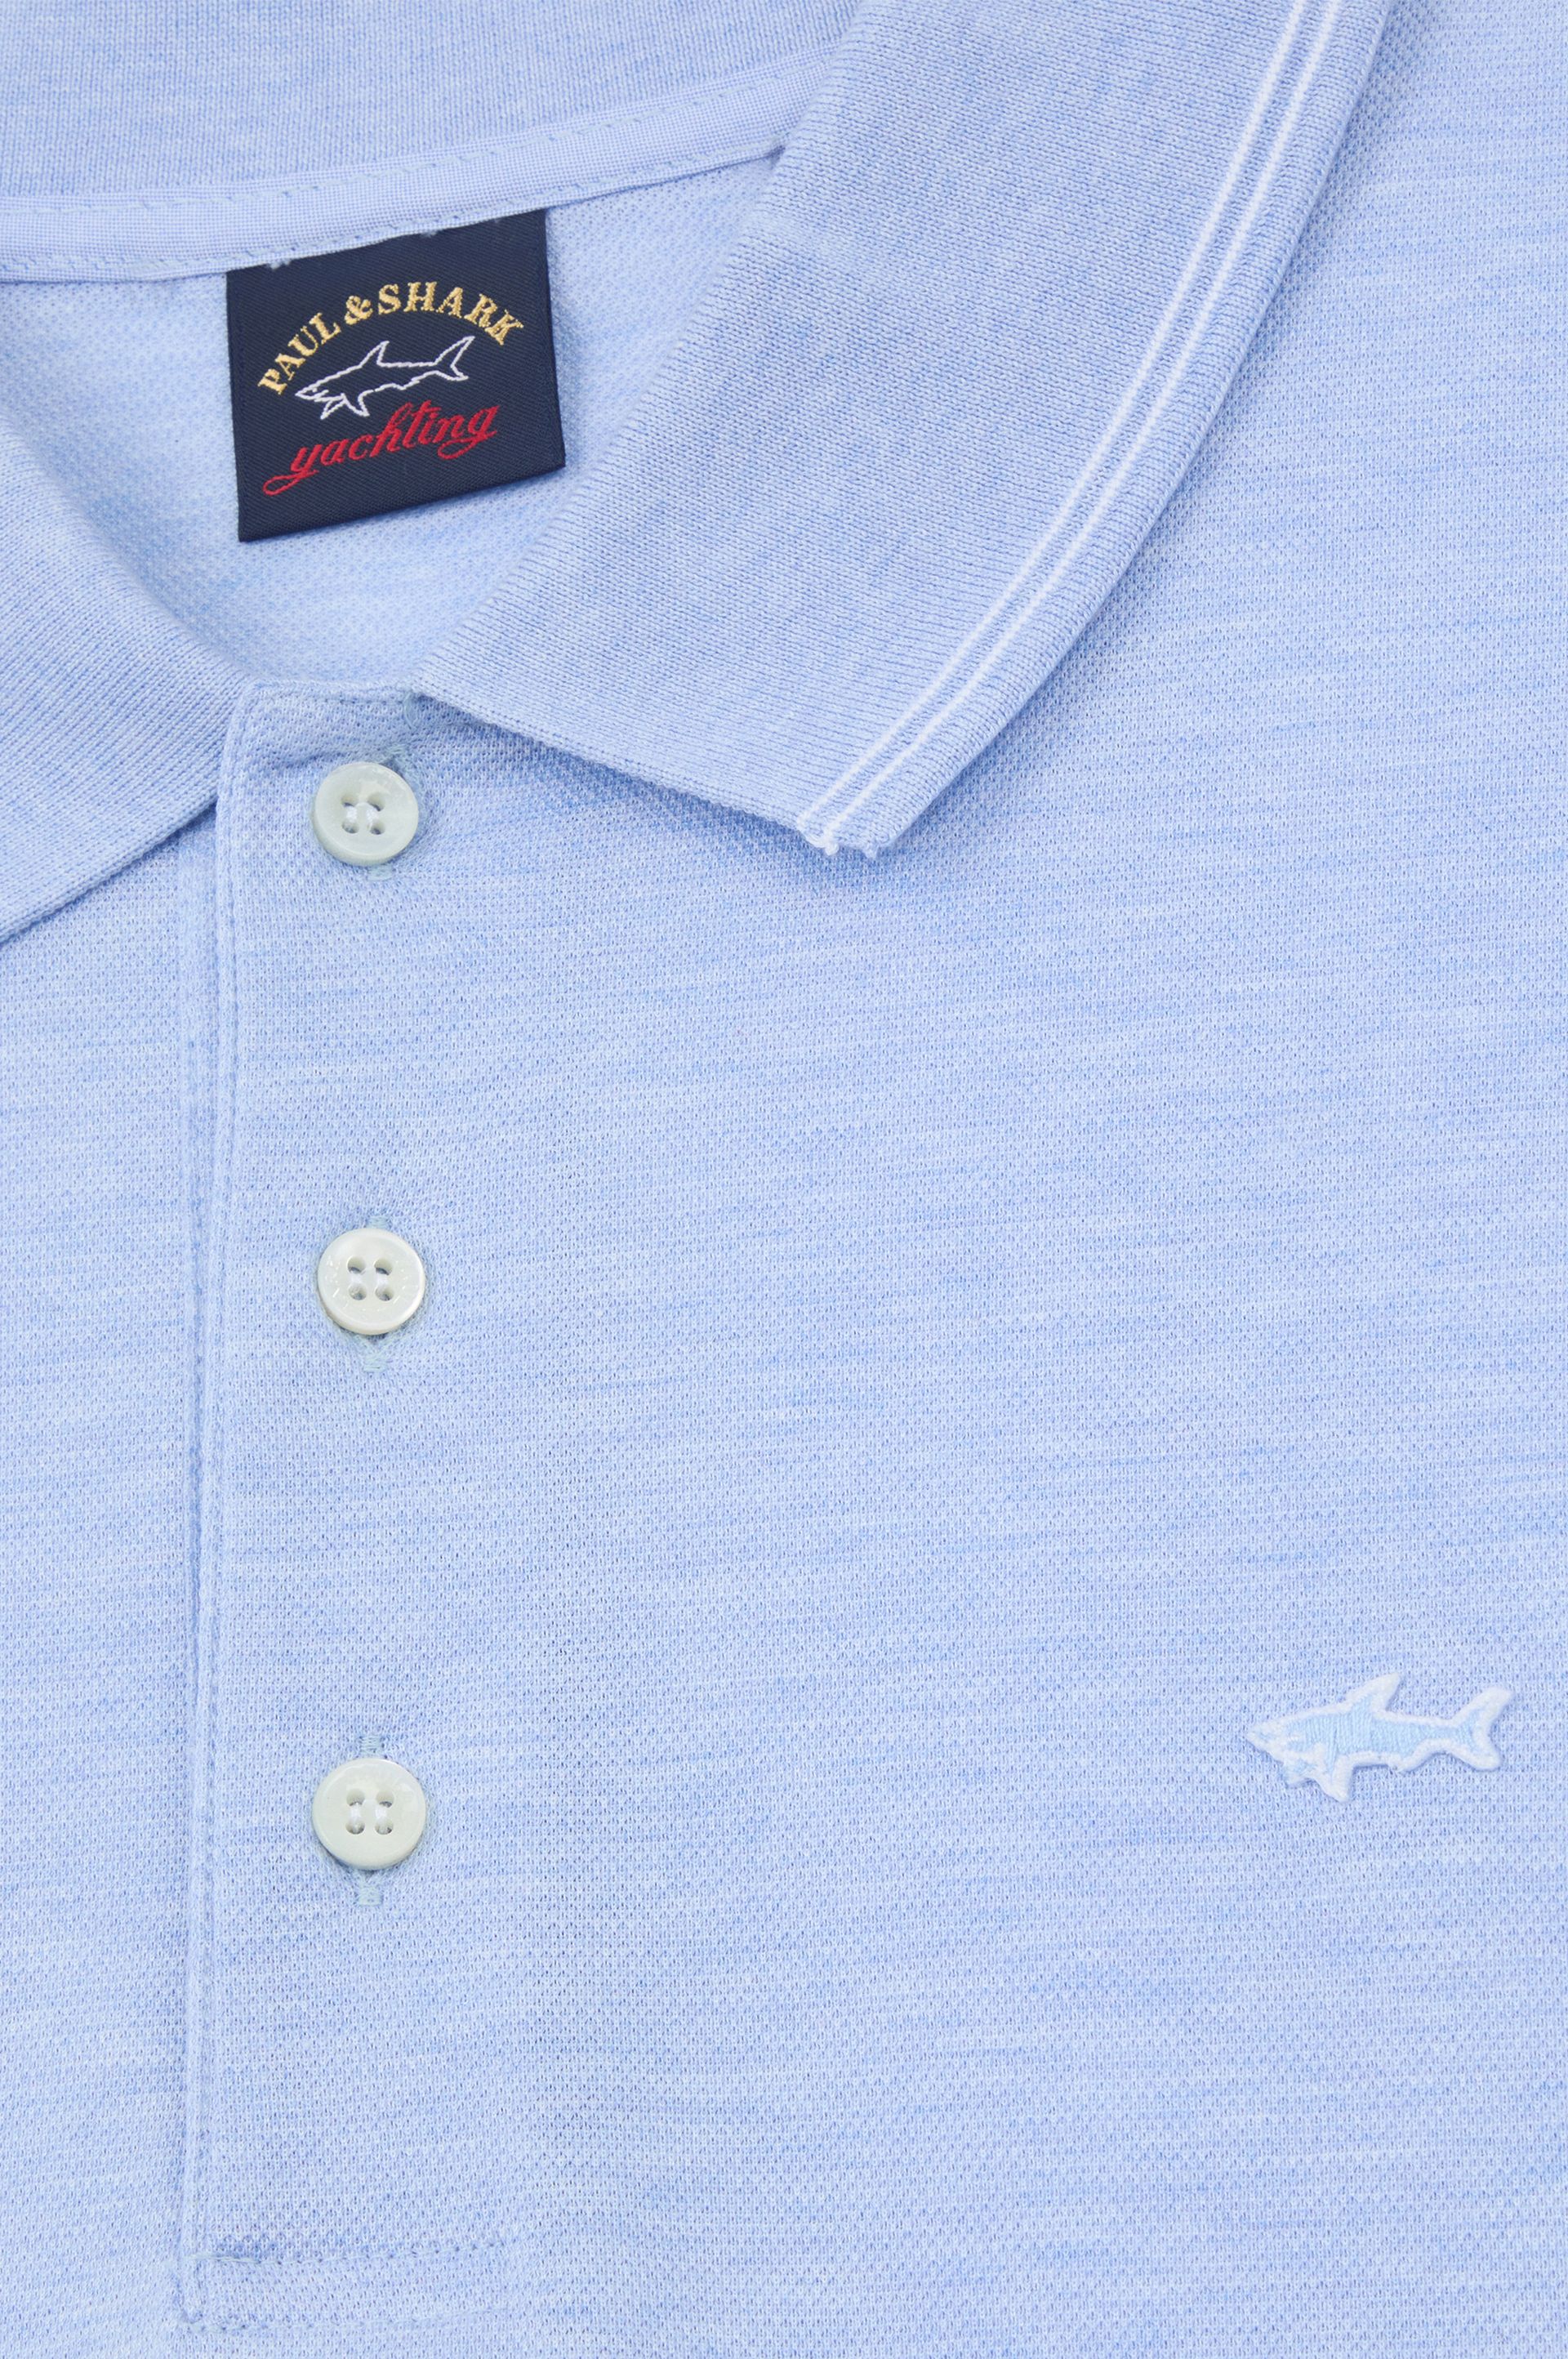 Polo liserés homme Paul & Shark bleu clair piqué coton bio | Georgespaul